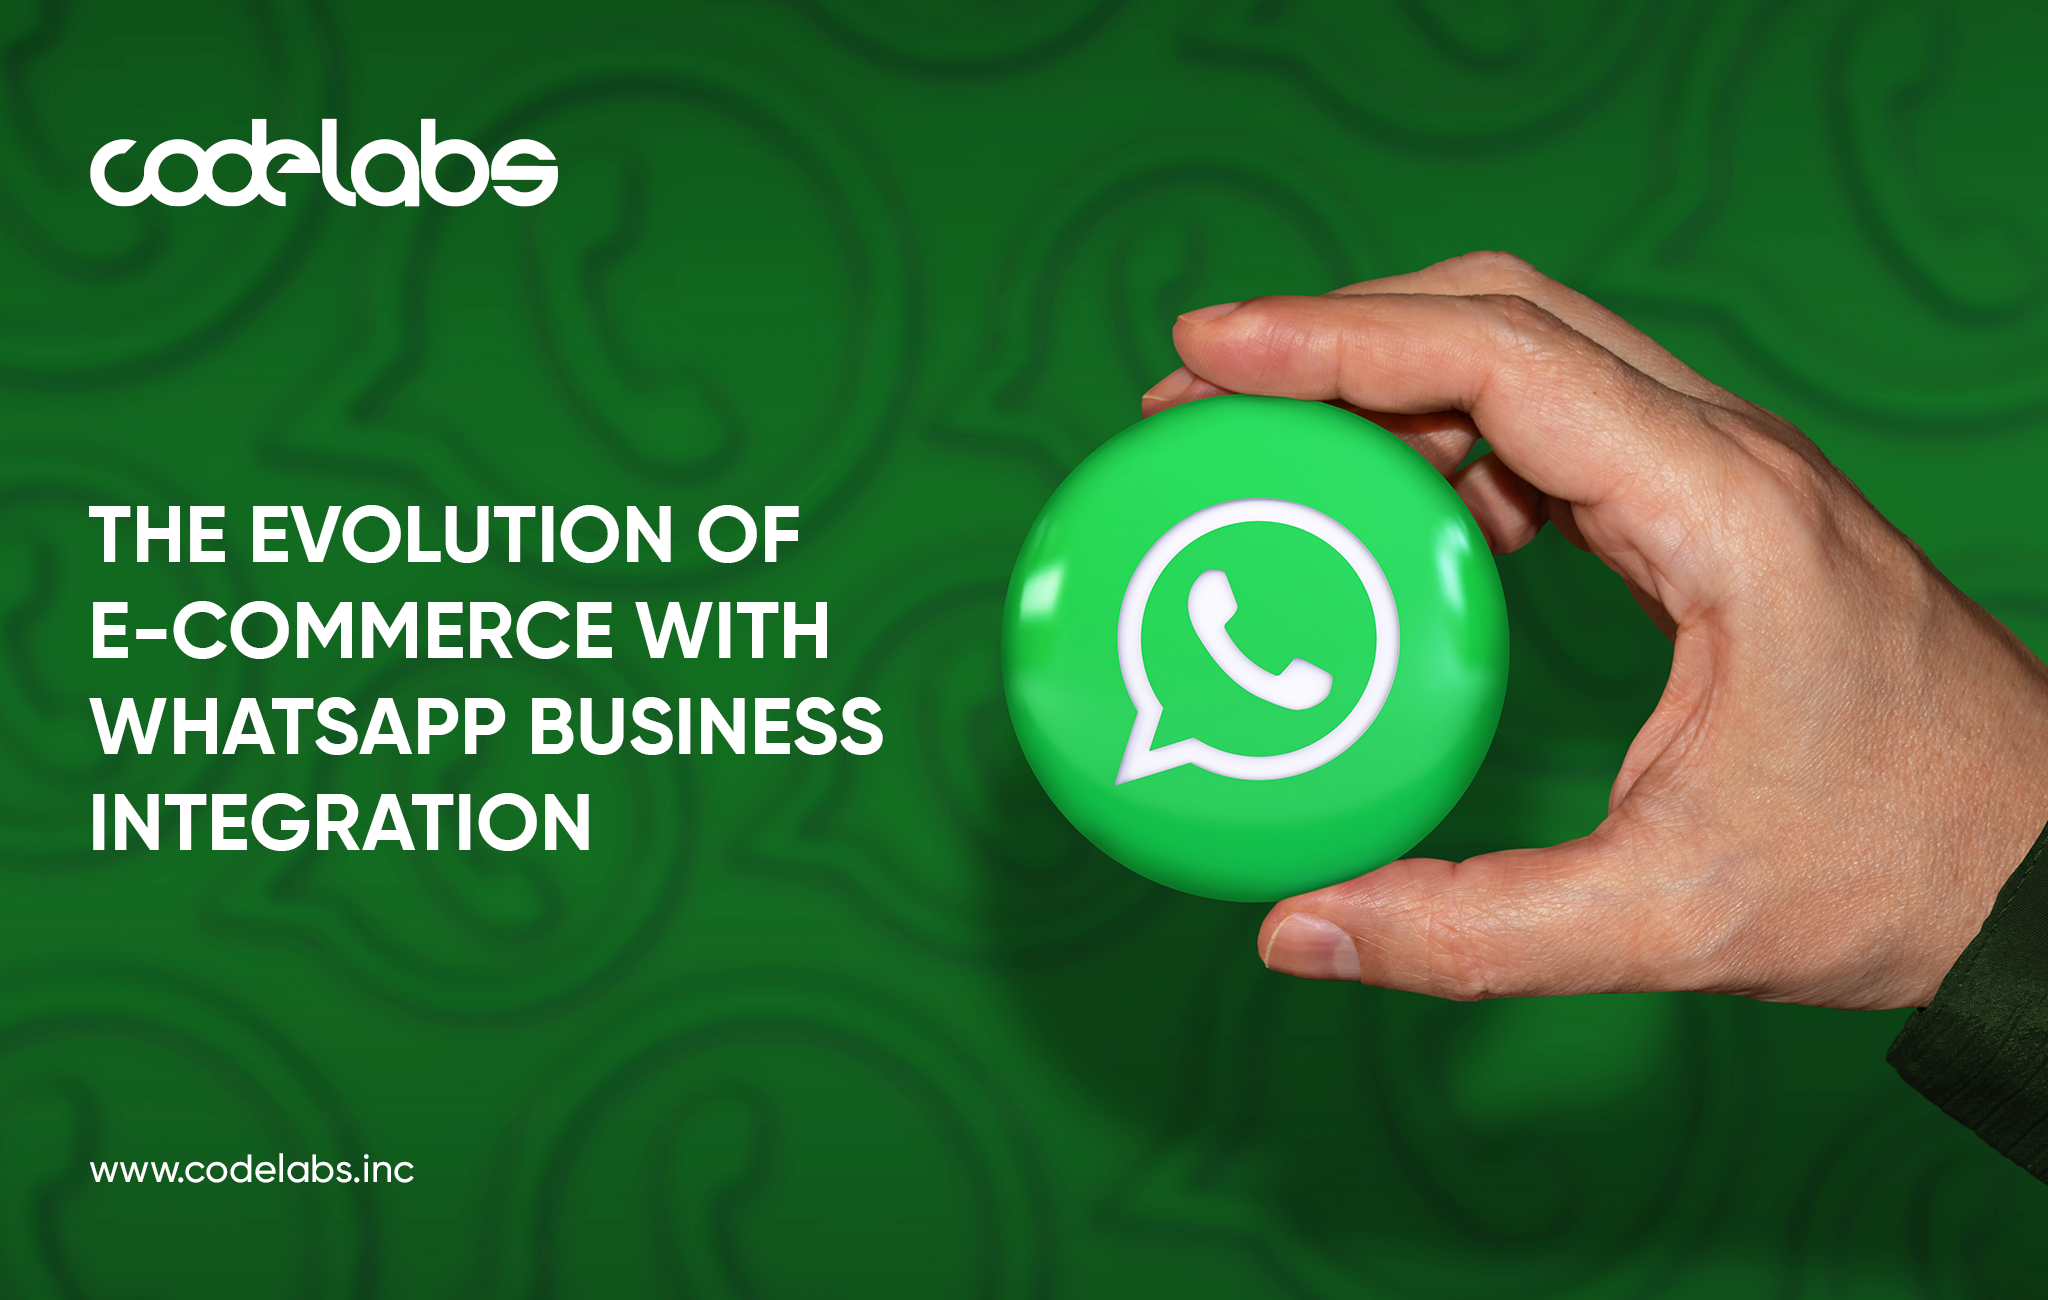 Whatsapp business integration